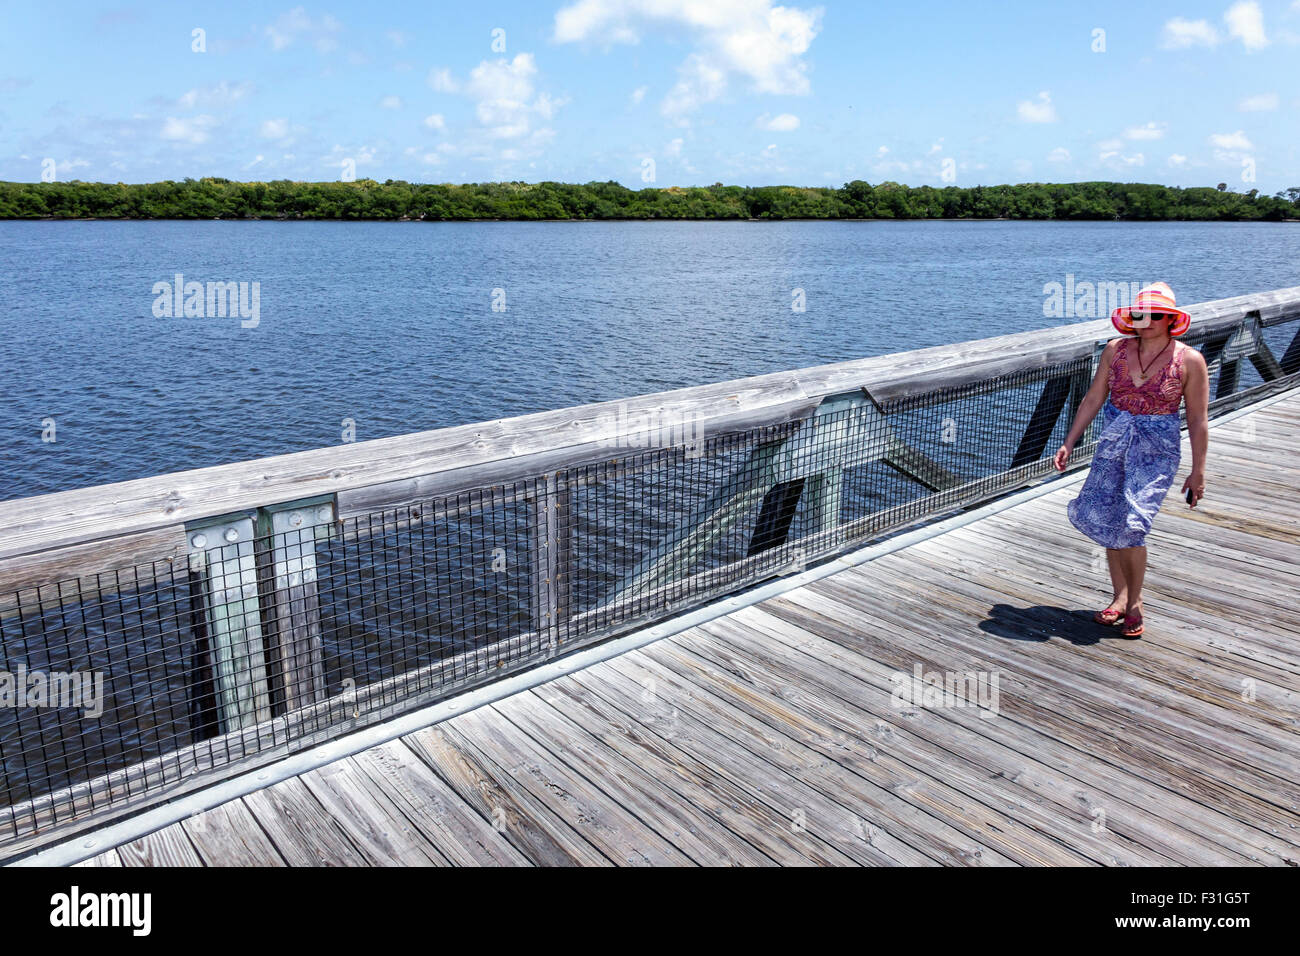 Florida North Palm Beach, John D. MacArthur Beach State Park, promenade en relief nature, Lake Worth Lagoon, adultes femme femme femme femme femme, marche, vis Banque D'Images